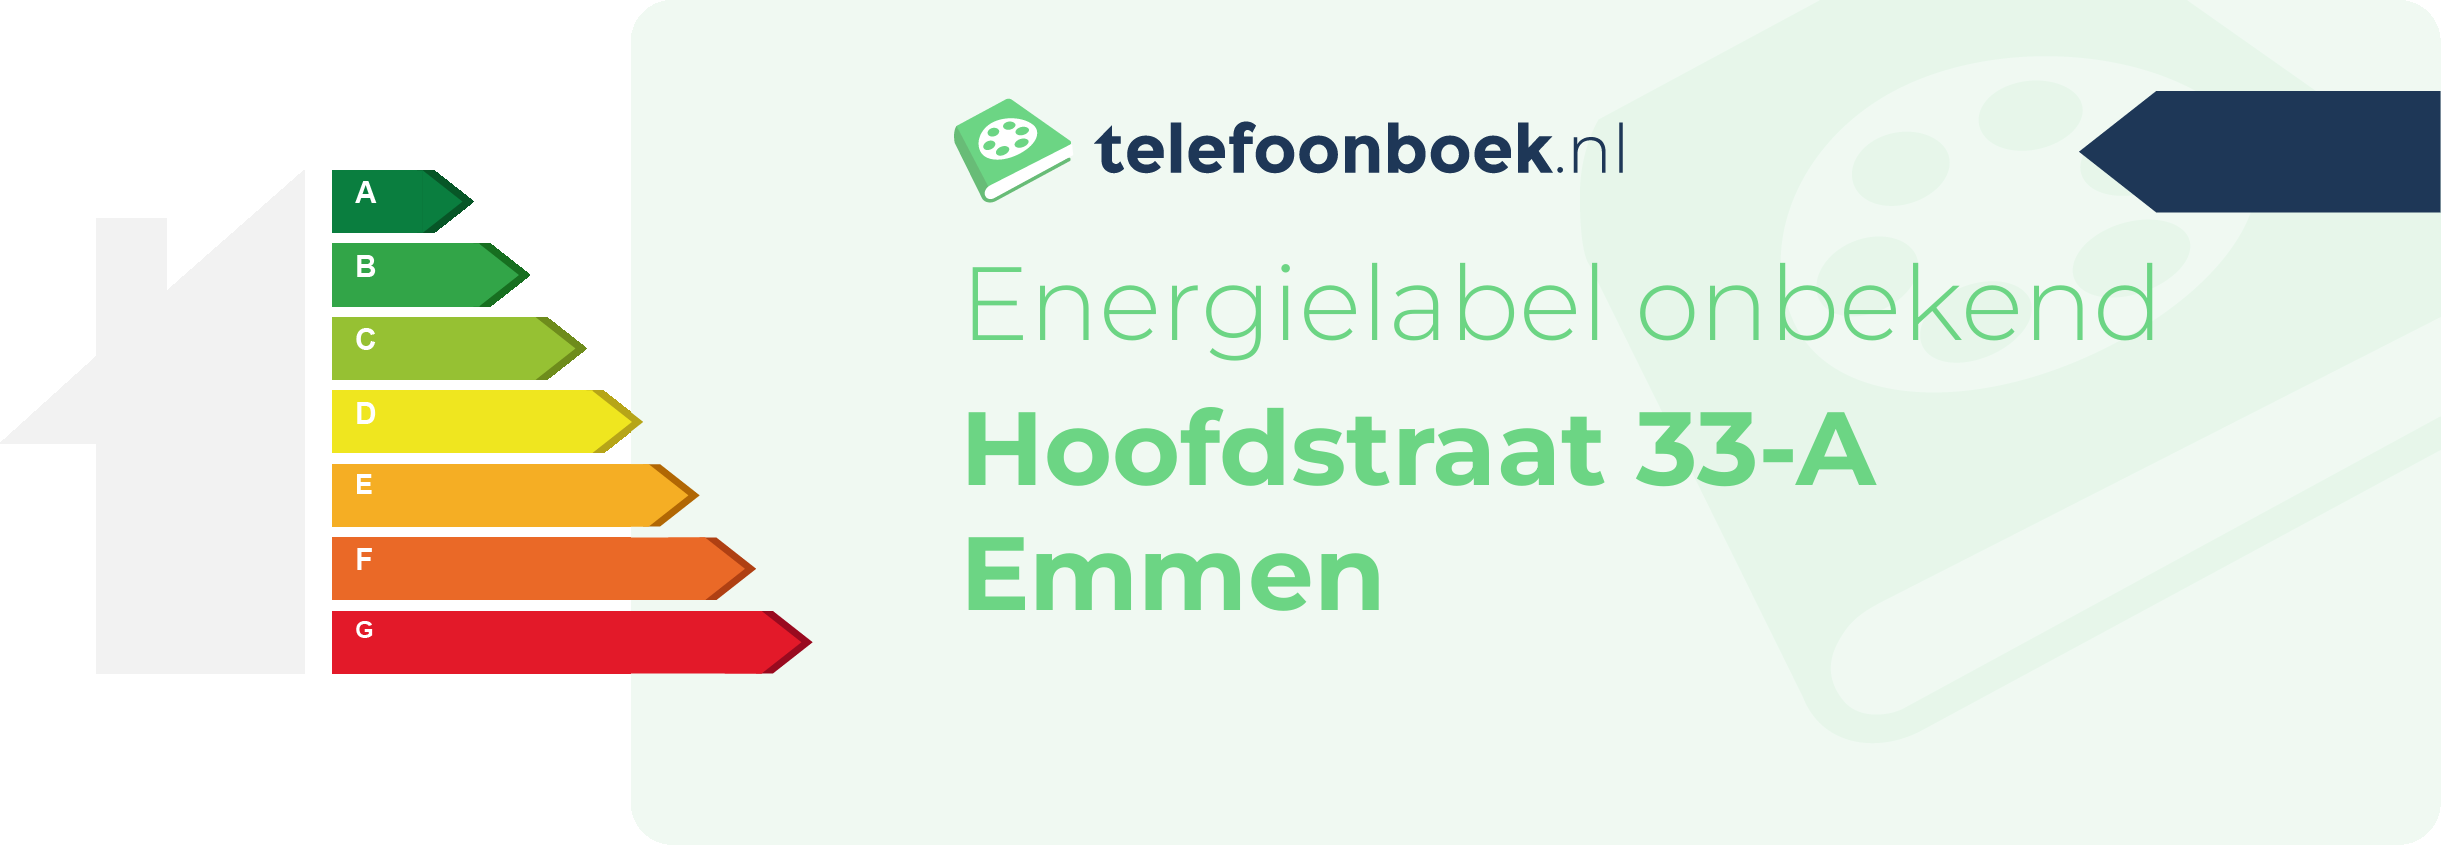 Energielabel Hoofdstraat 33-A Emmen